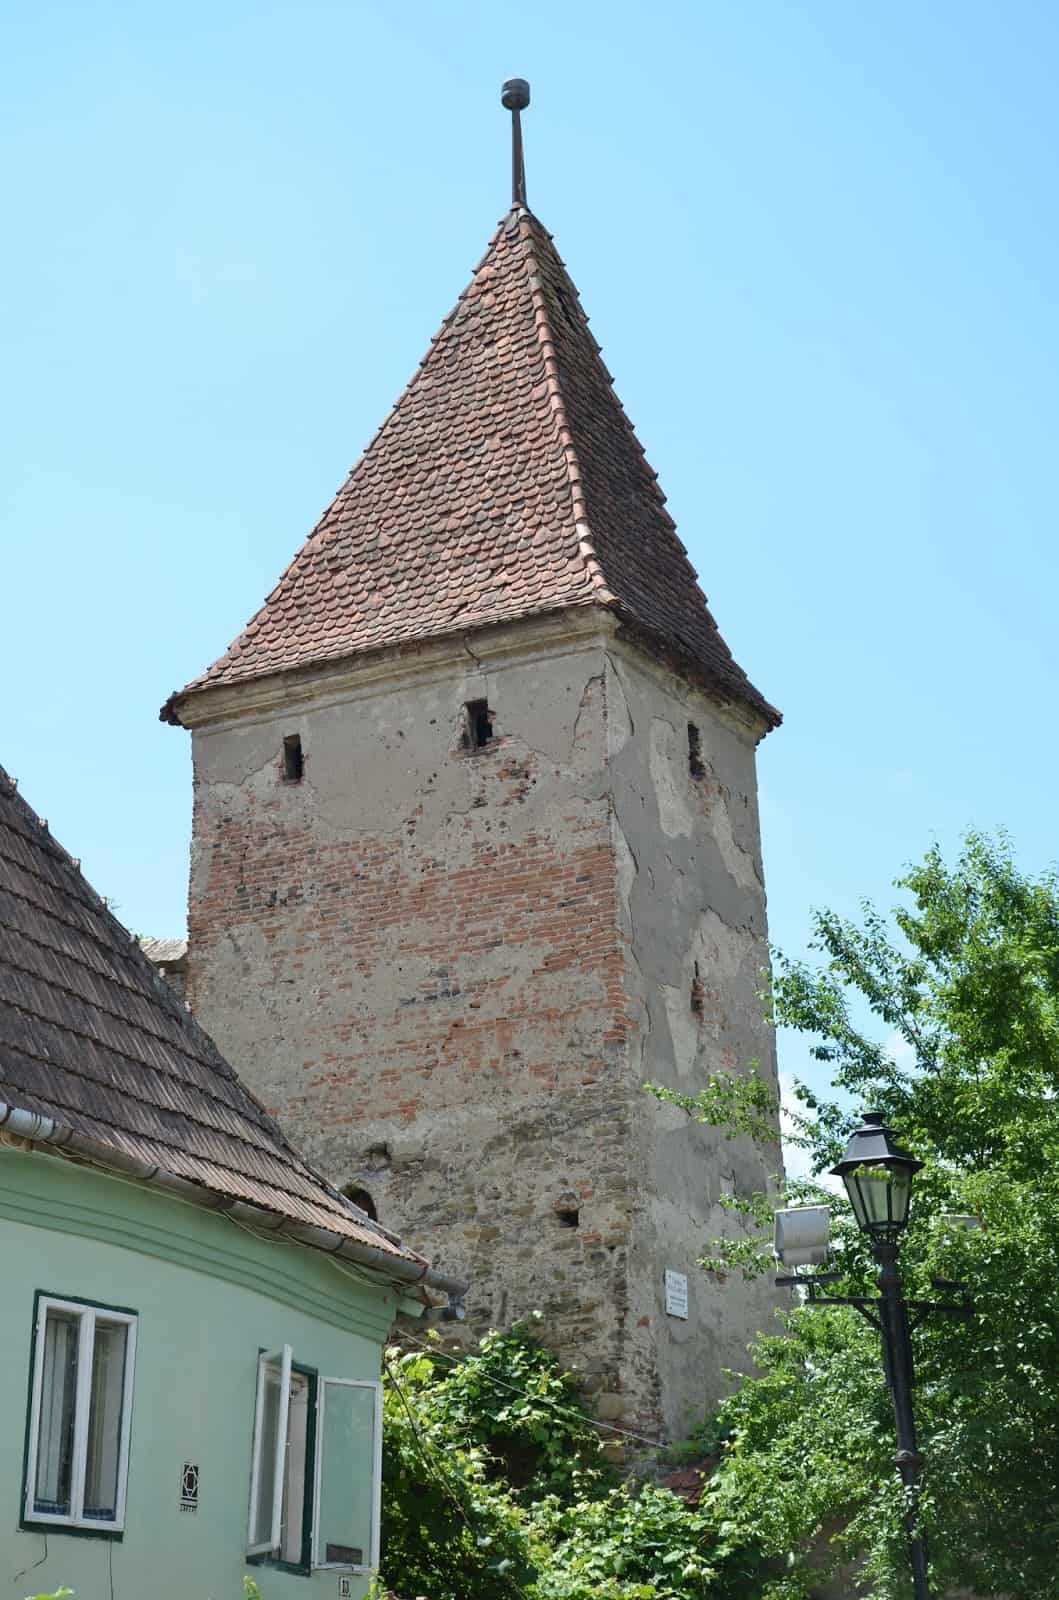 Butcher’s Tower in Sighişoara, Romania